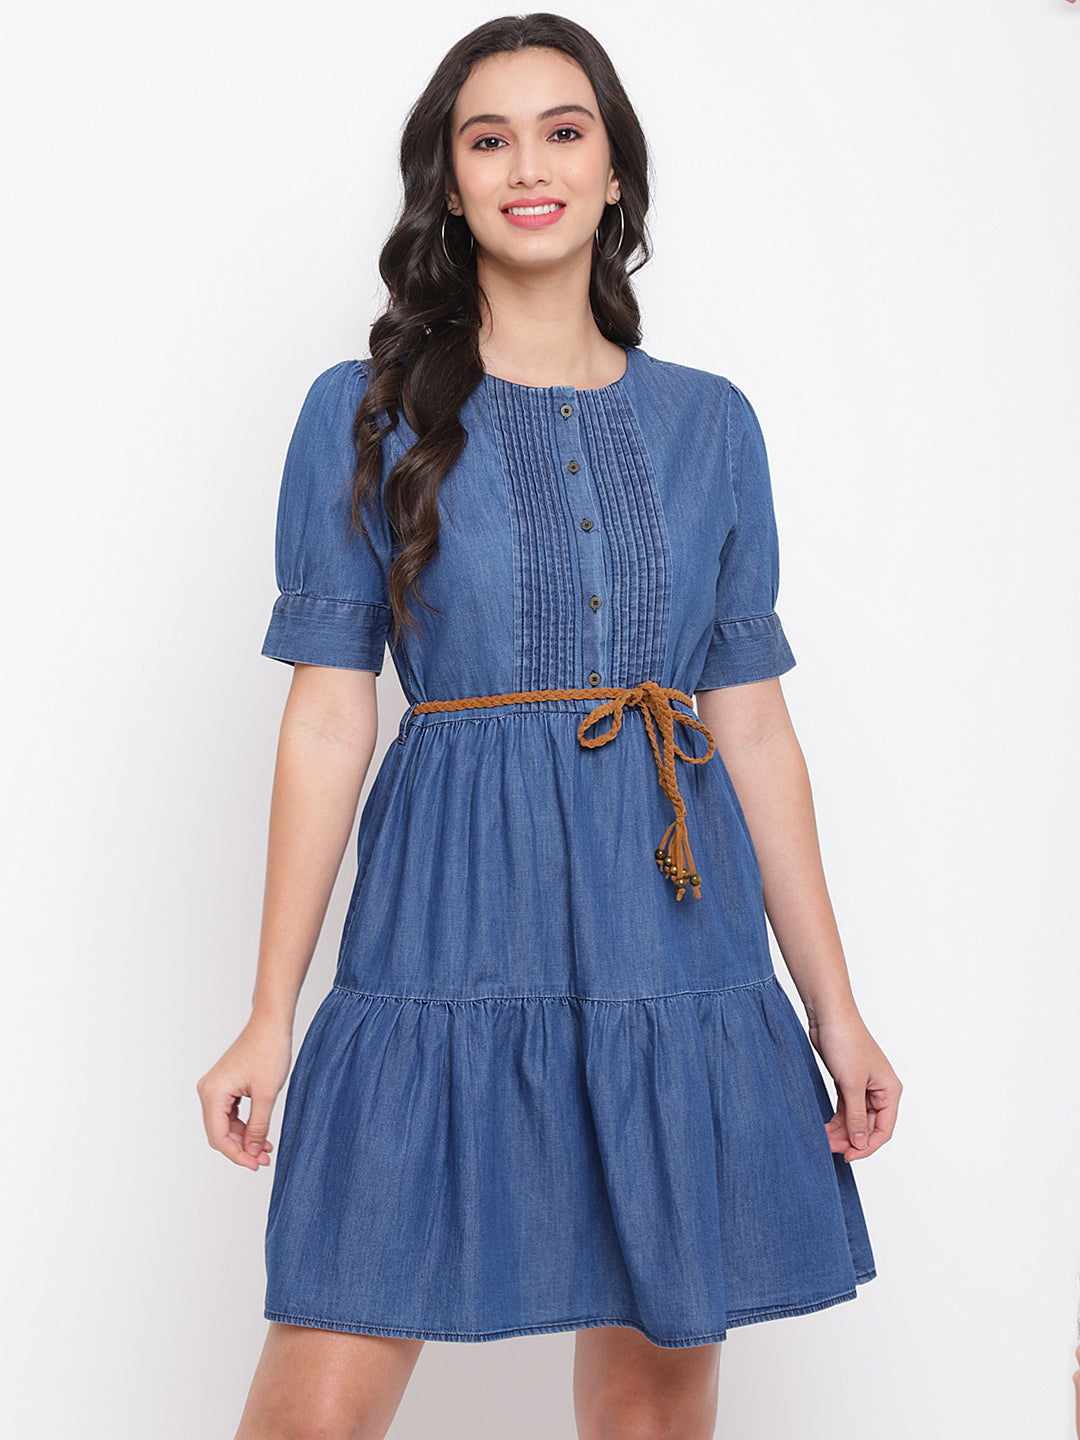 Blue Half Sleeve Solid A-Line Dress